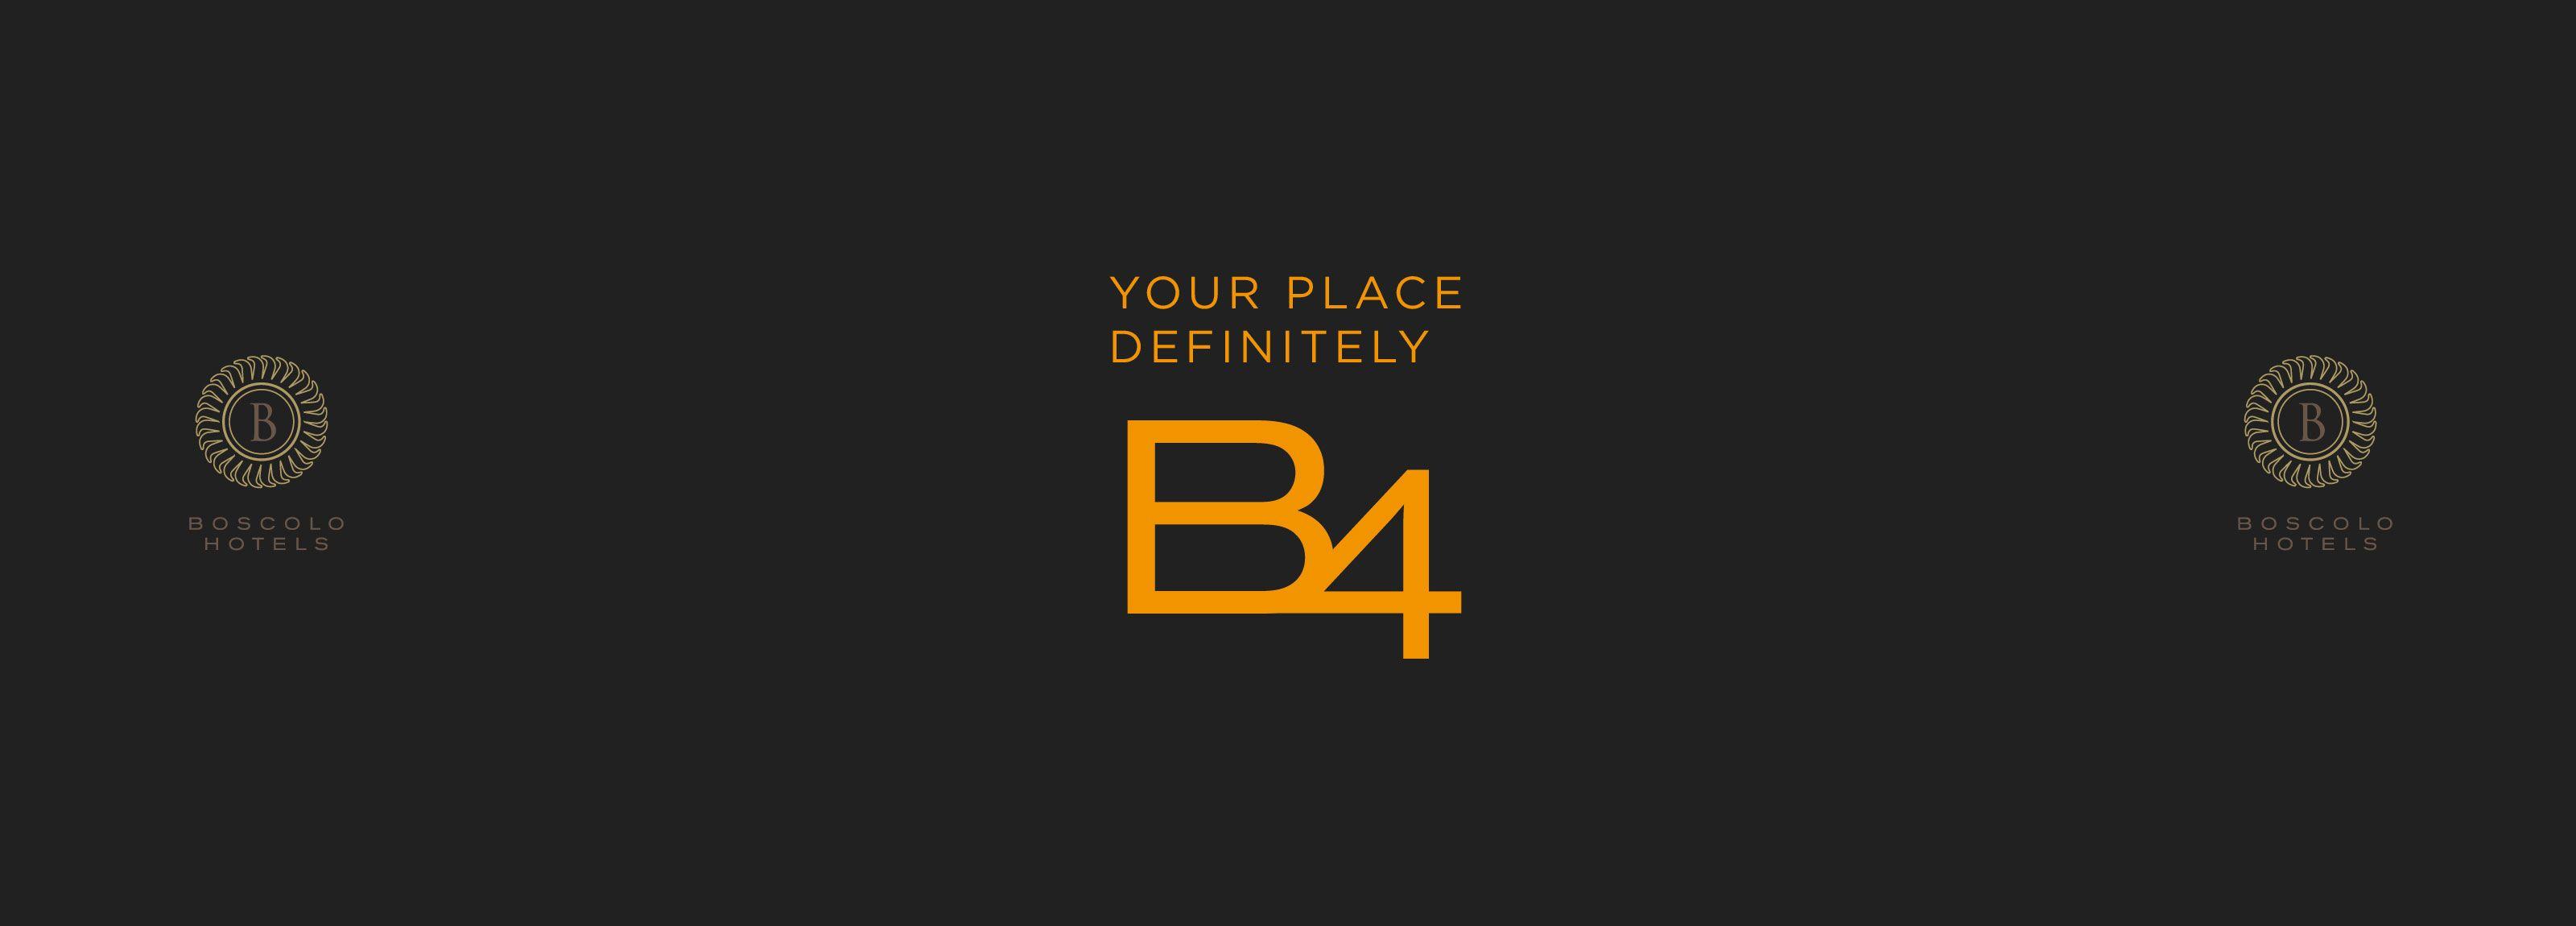 B4 Logo - Boscolo Hotels B4 Logo design Design Group